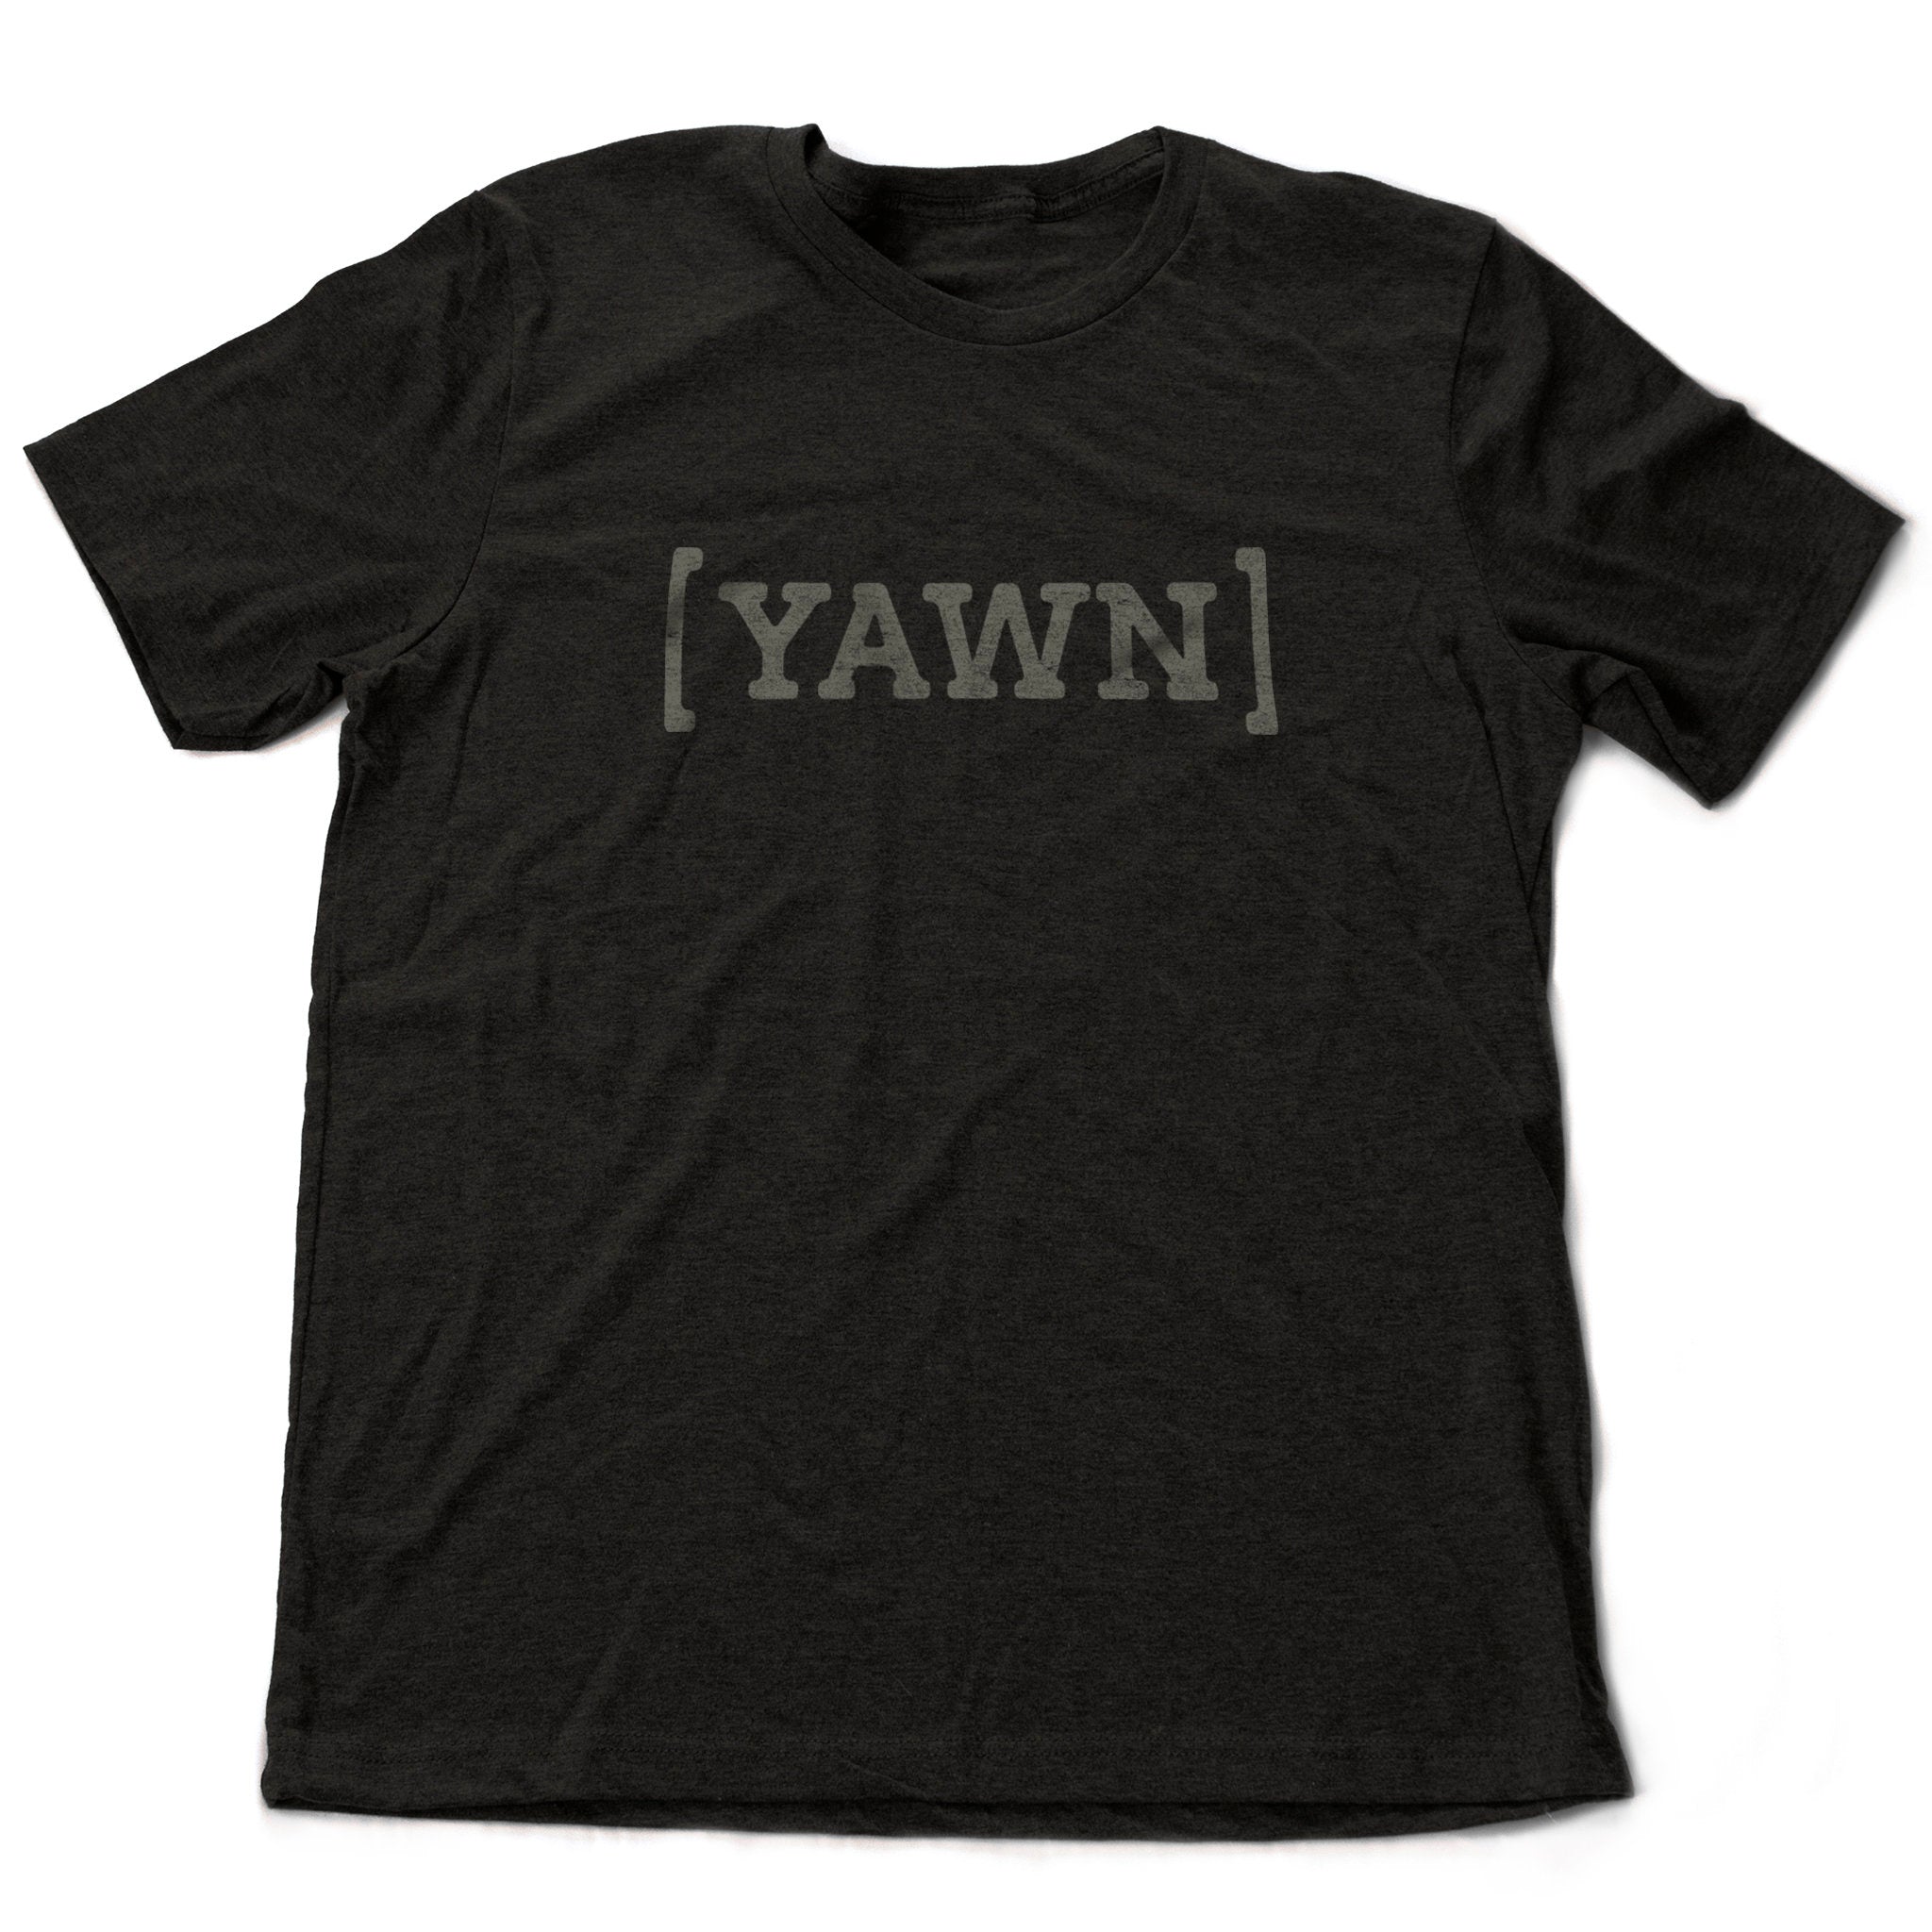 YAWN — premium t-shirt